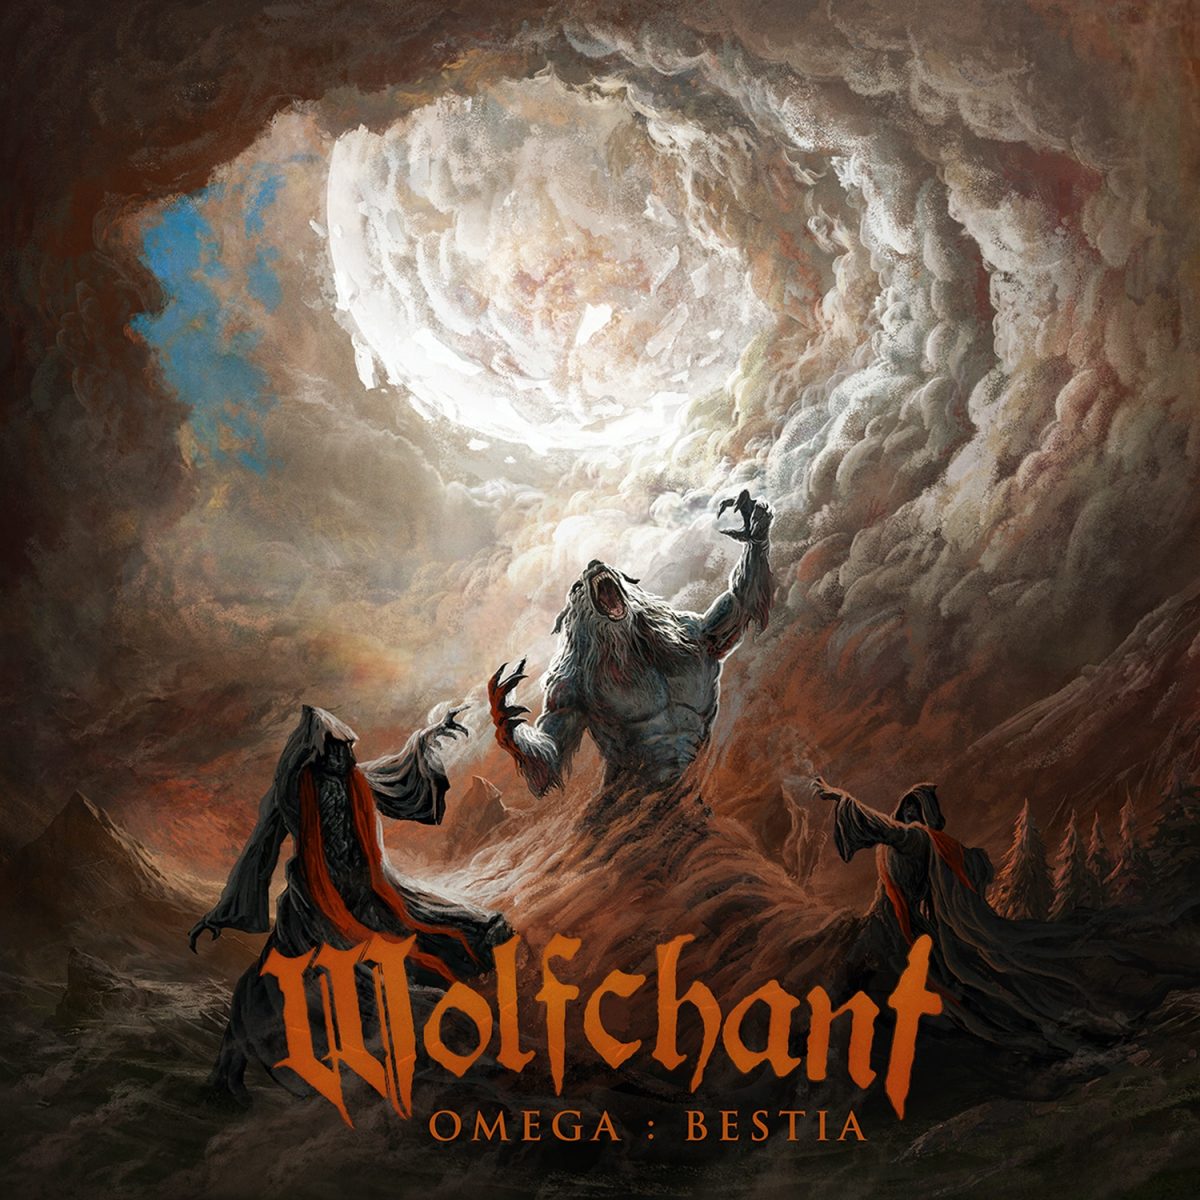 wolfchant-omega-bestia-album-cover